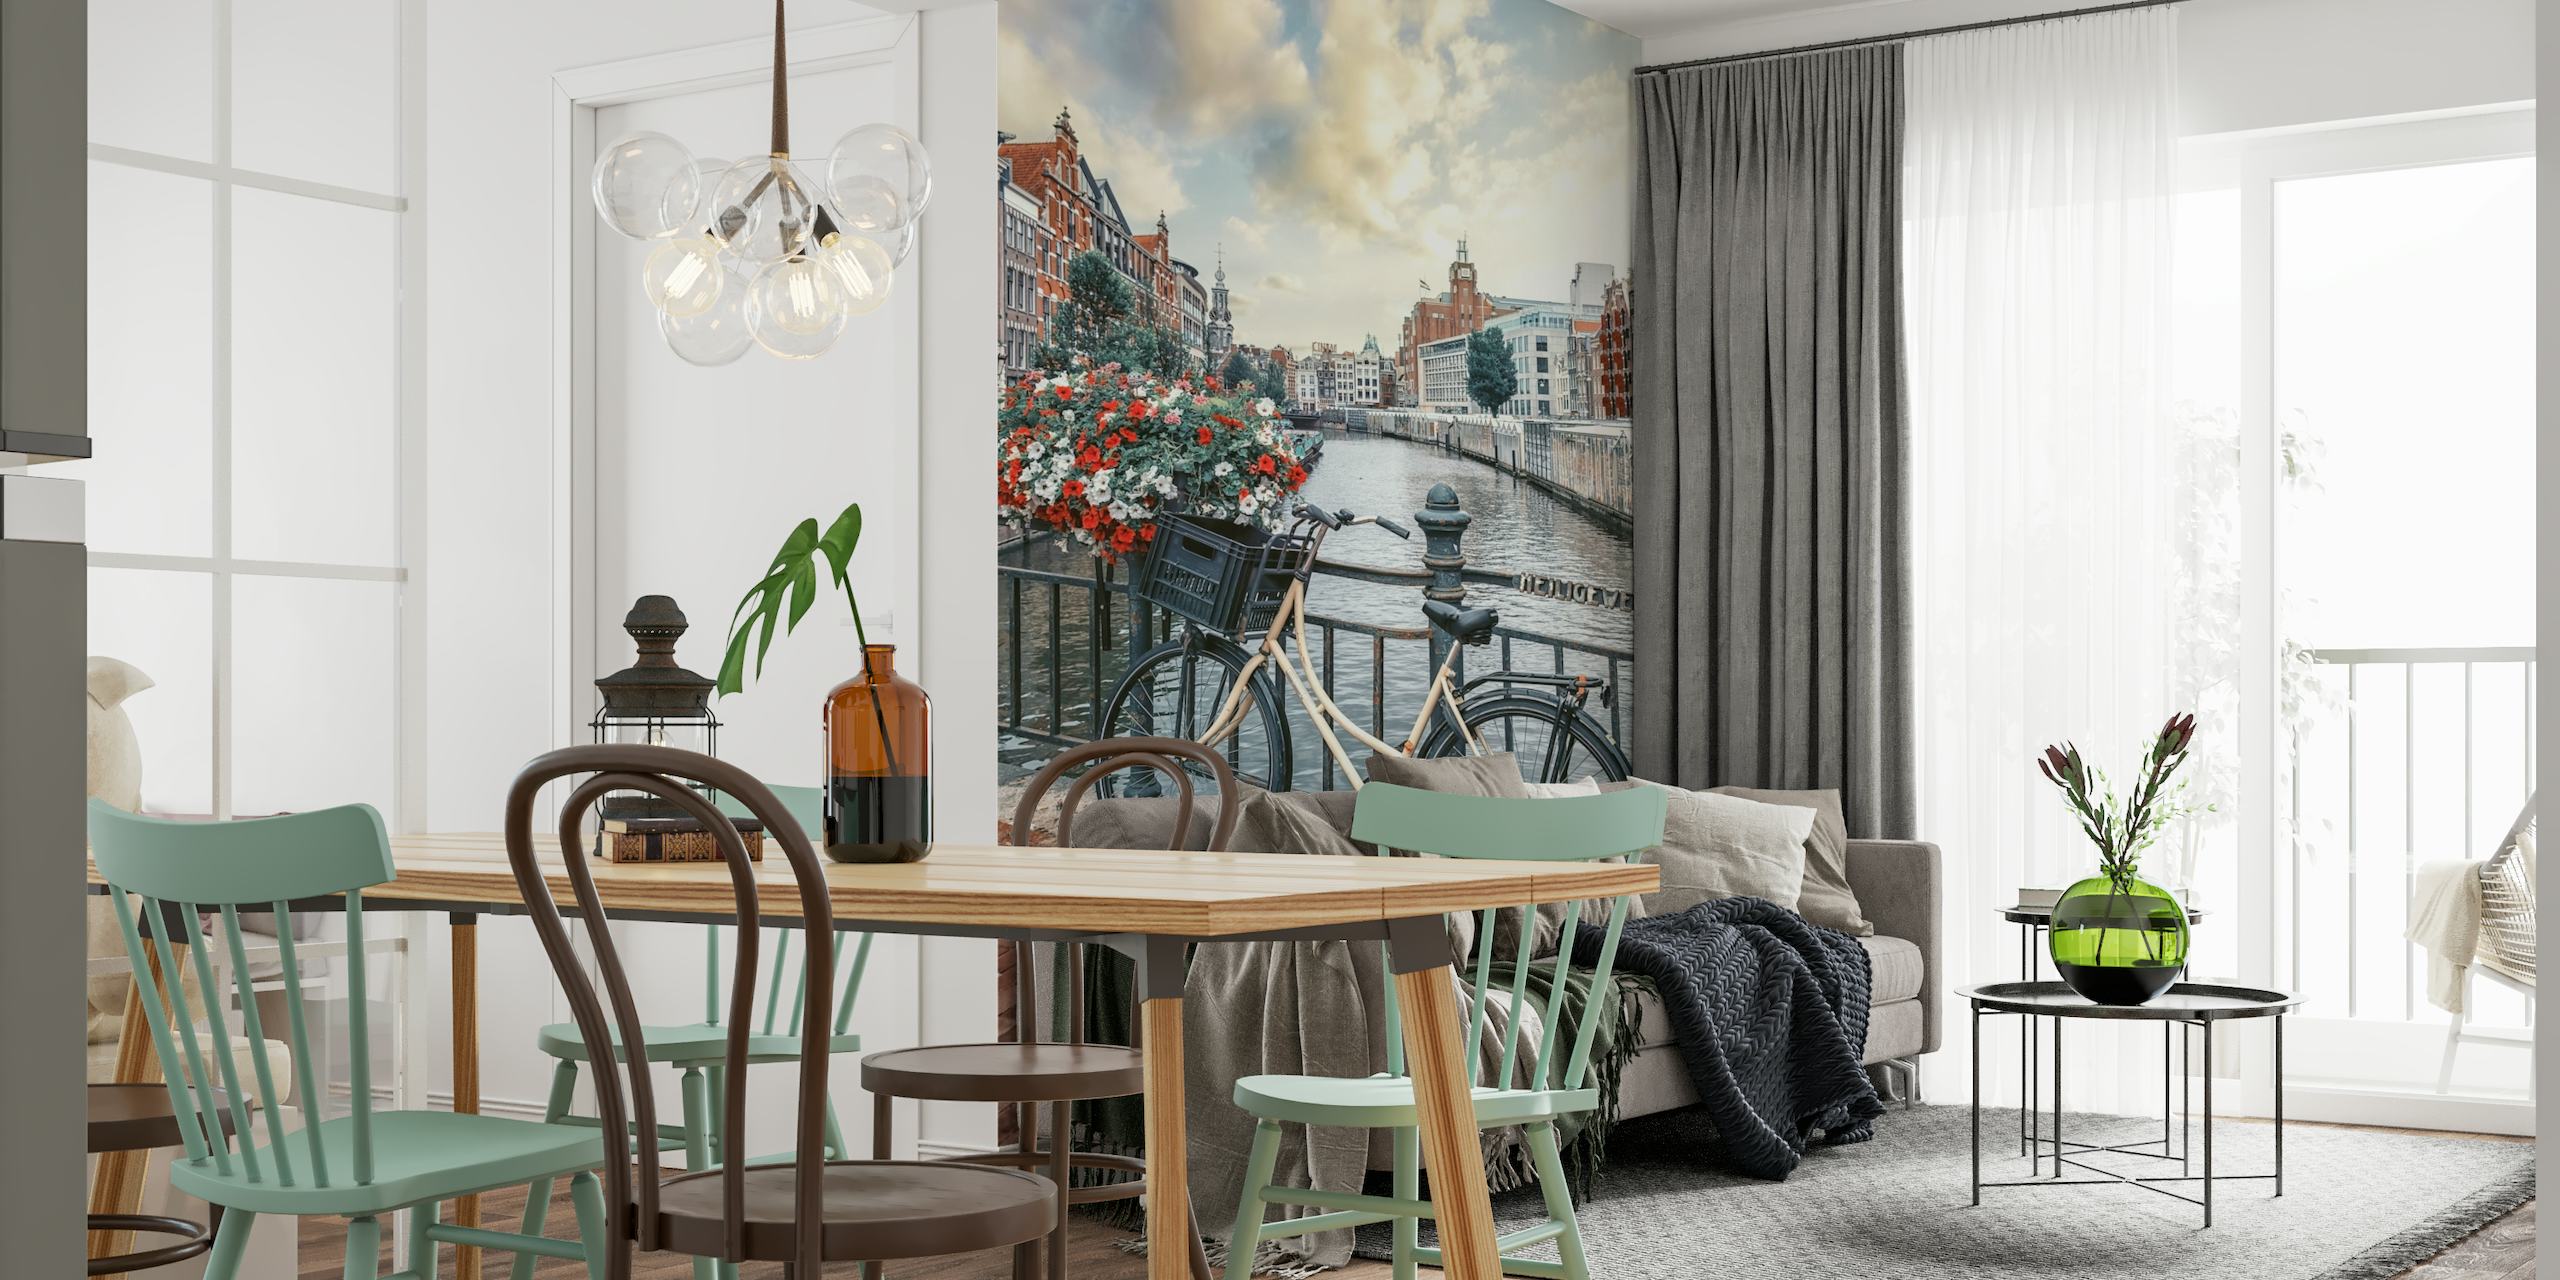 Romantic Amsterdam wallpaper